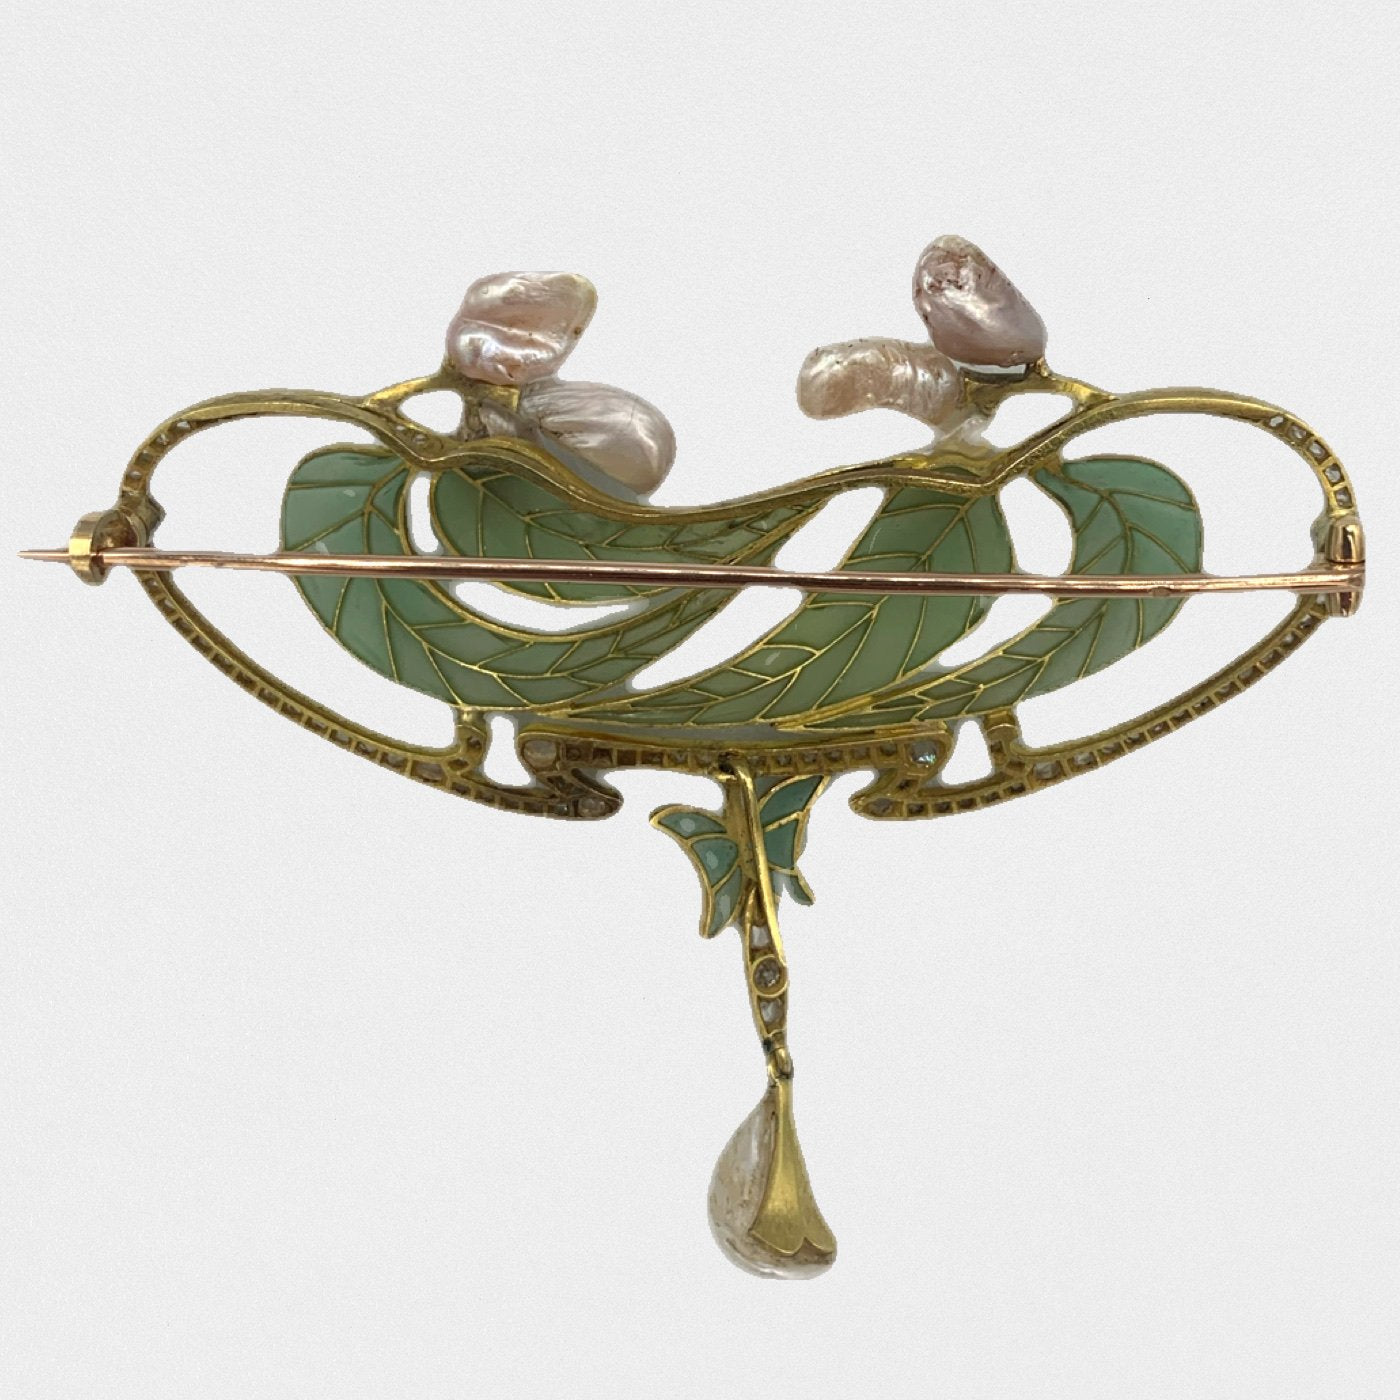 Lysis vintage Art nouveau vintage gold brooch - Fine jewelry